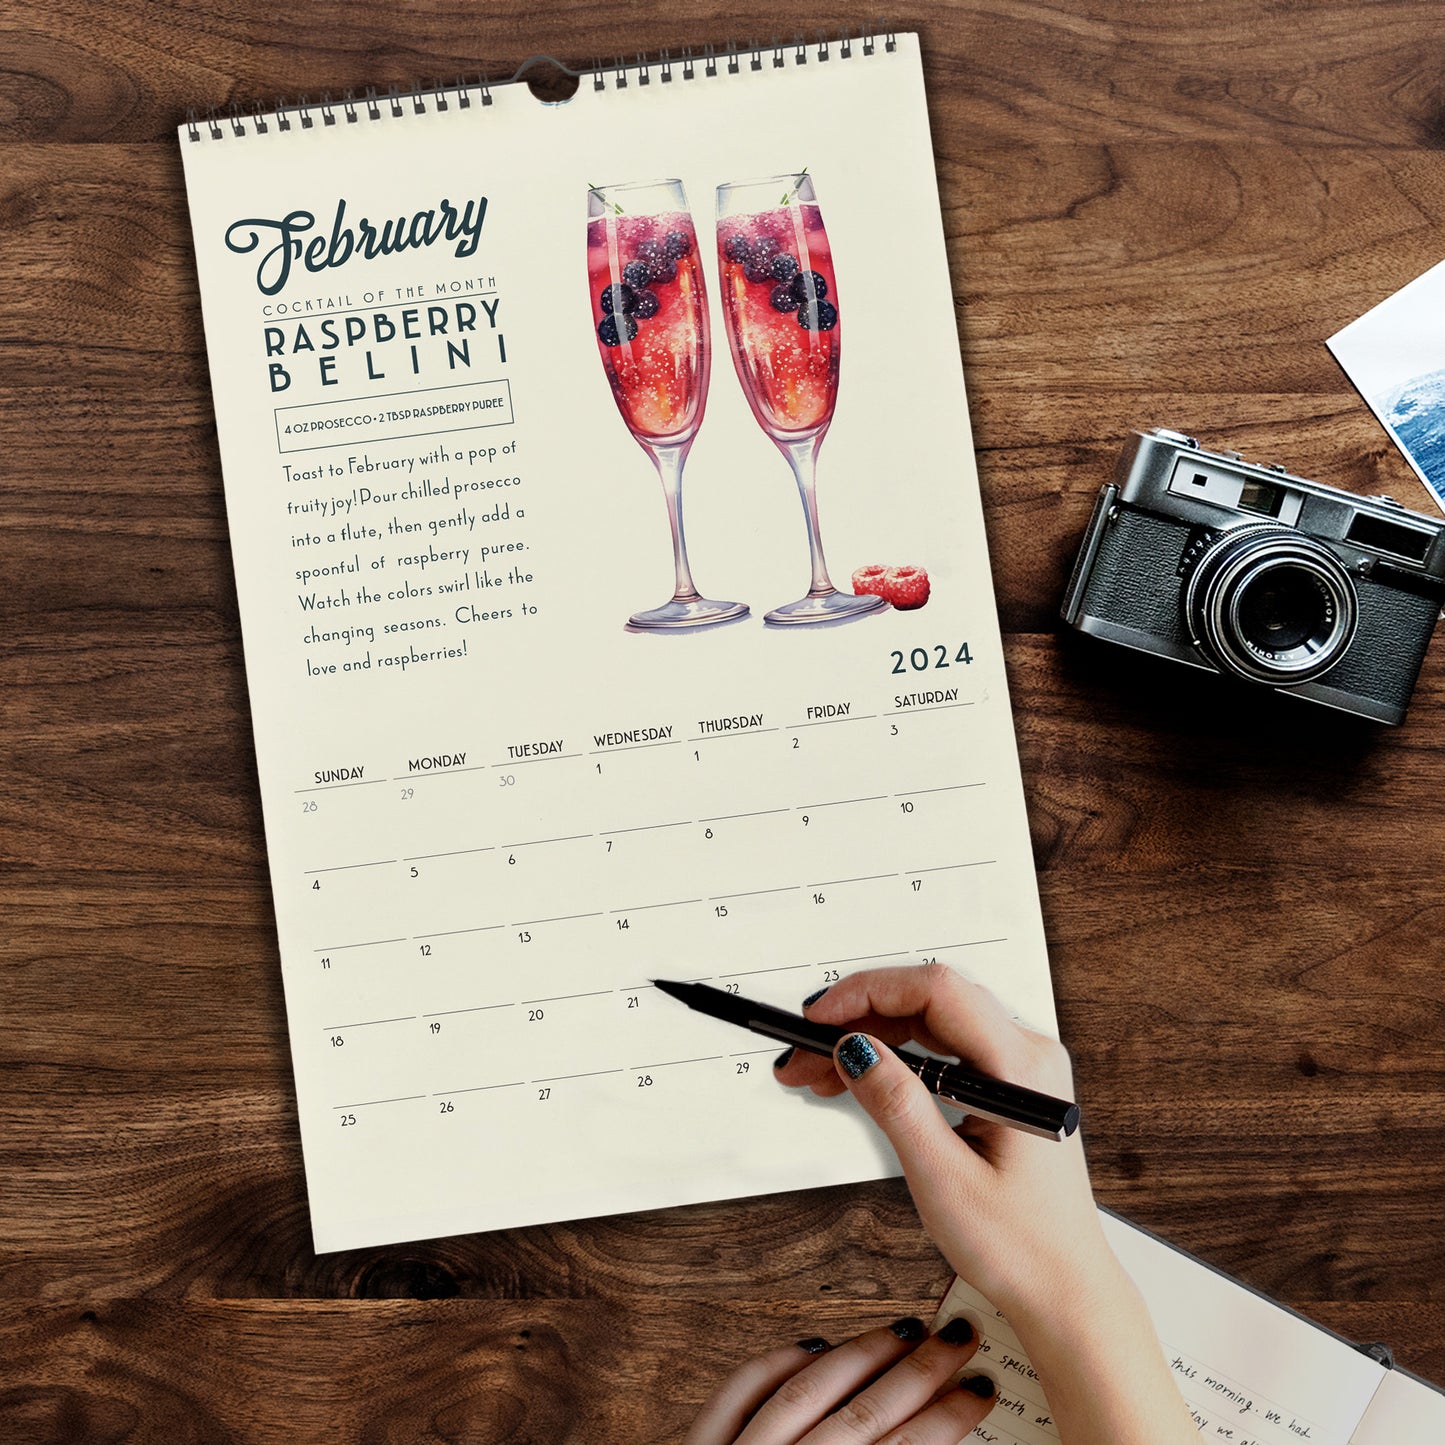 2024 Classic Cocktail Recipe Calendar